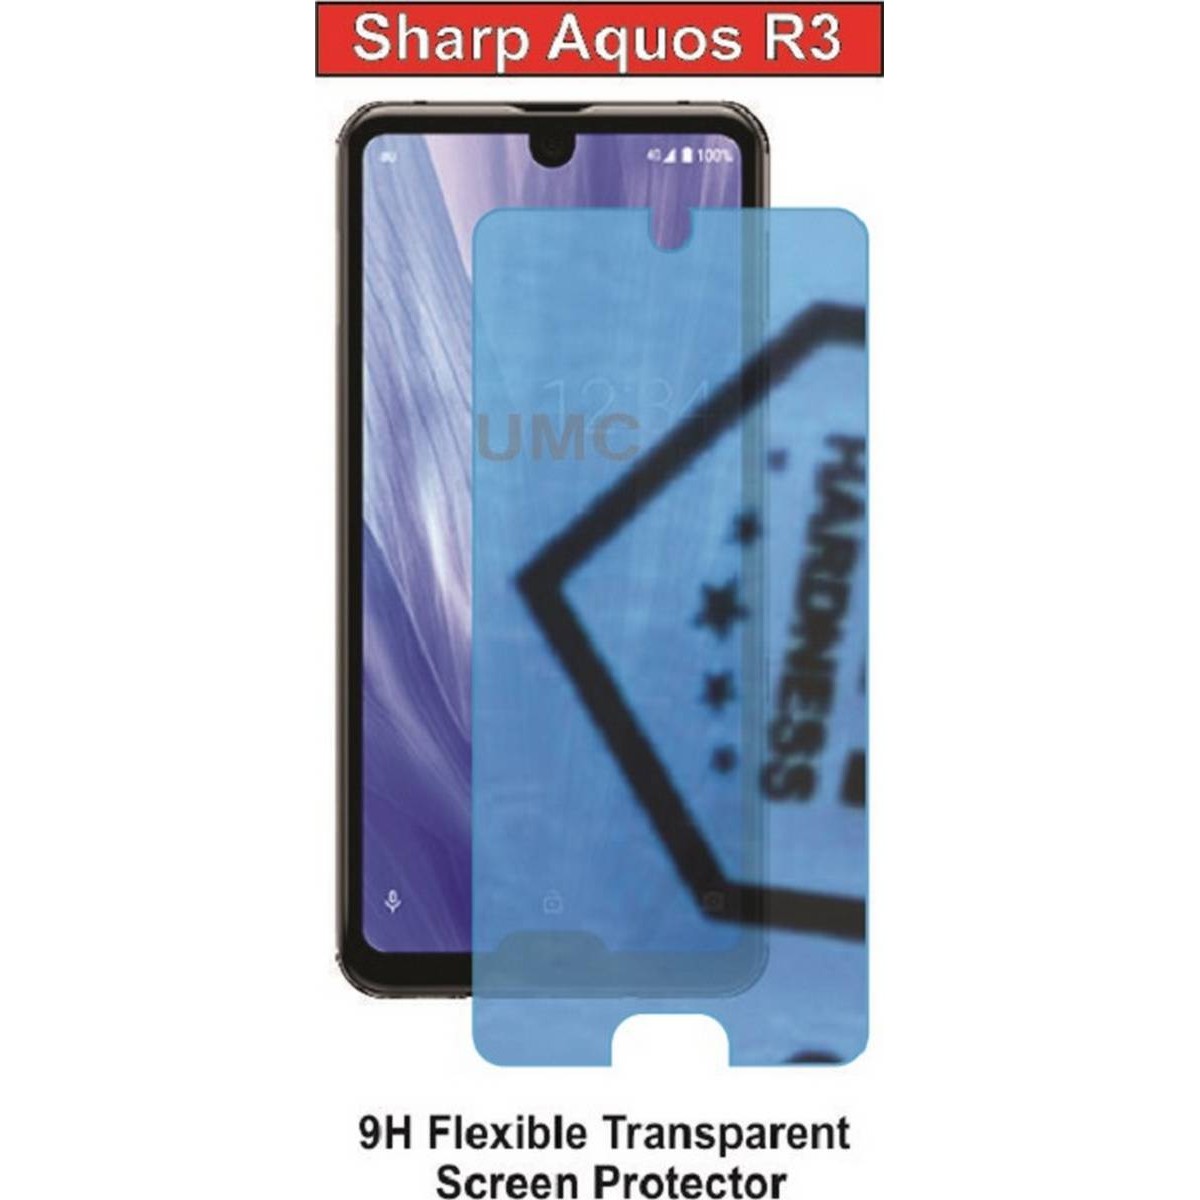 Sharp aquos r3